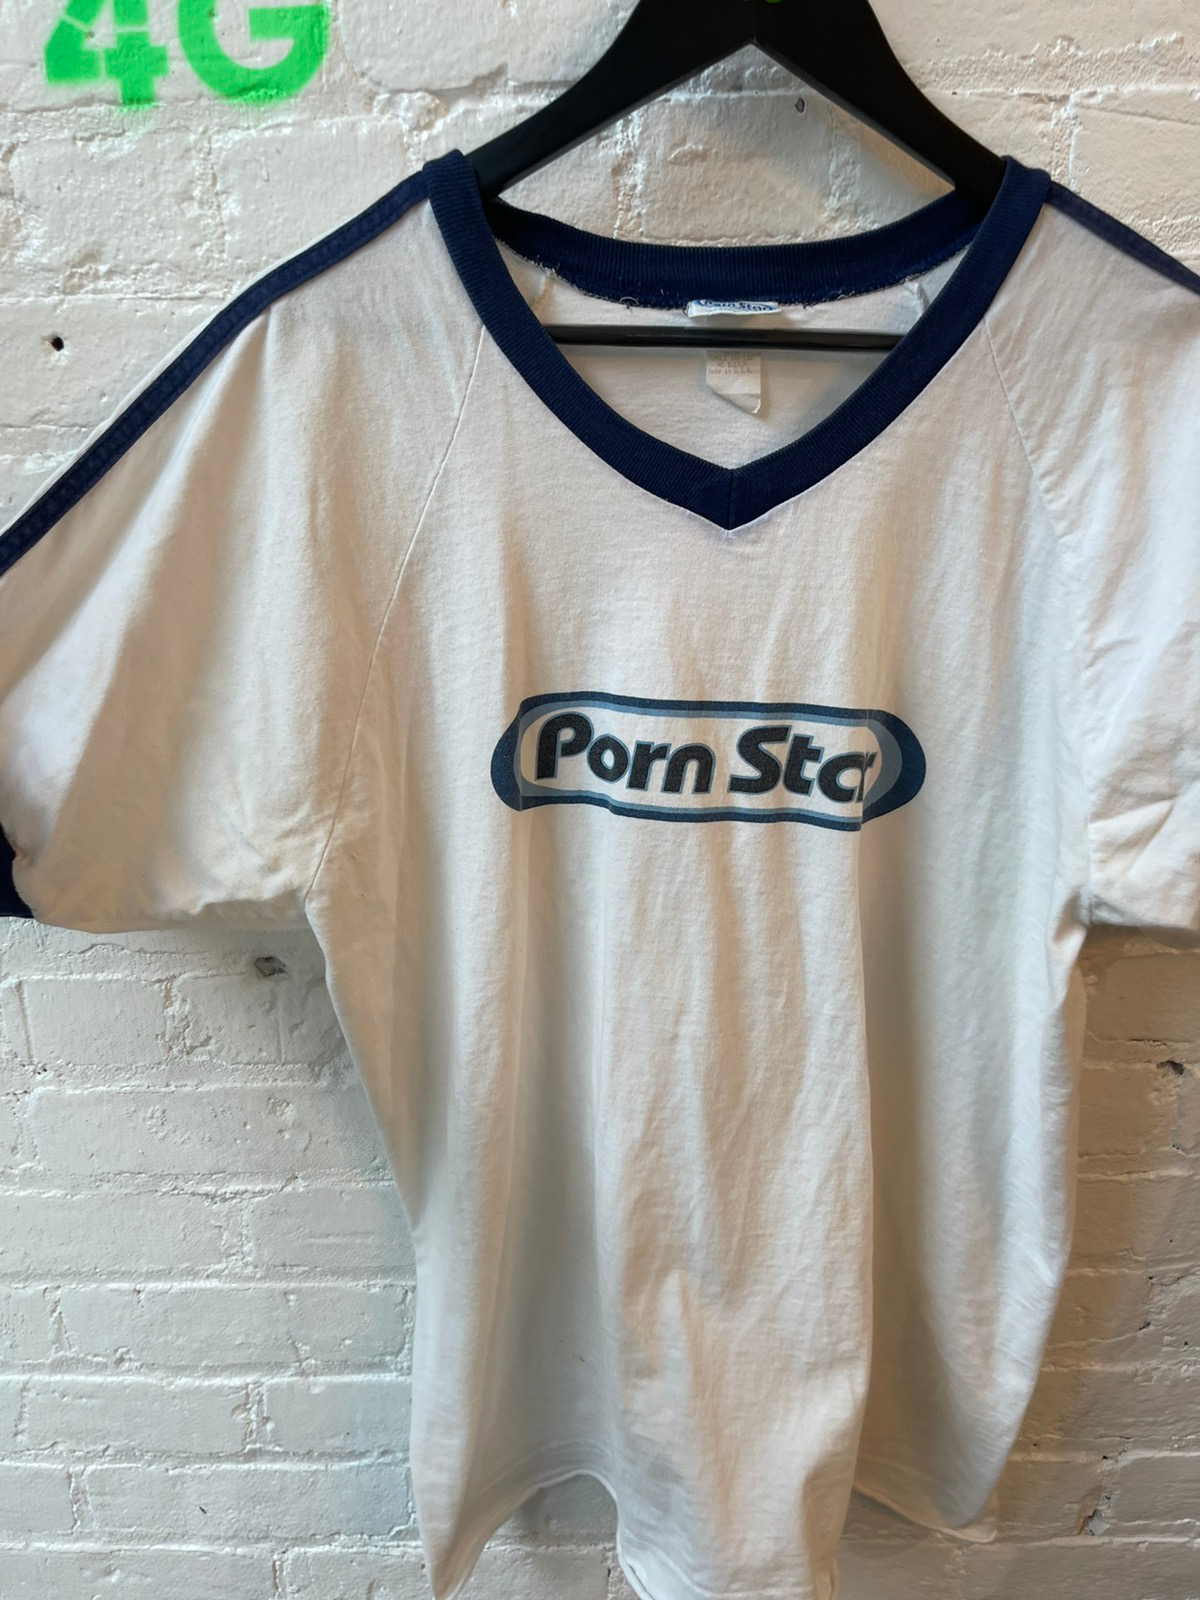 Vintage 90s PORNSTAR SEX PORN STAR SHIRT